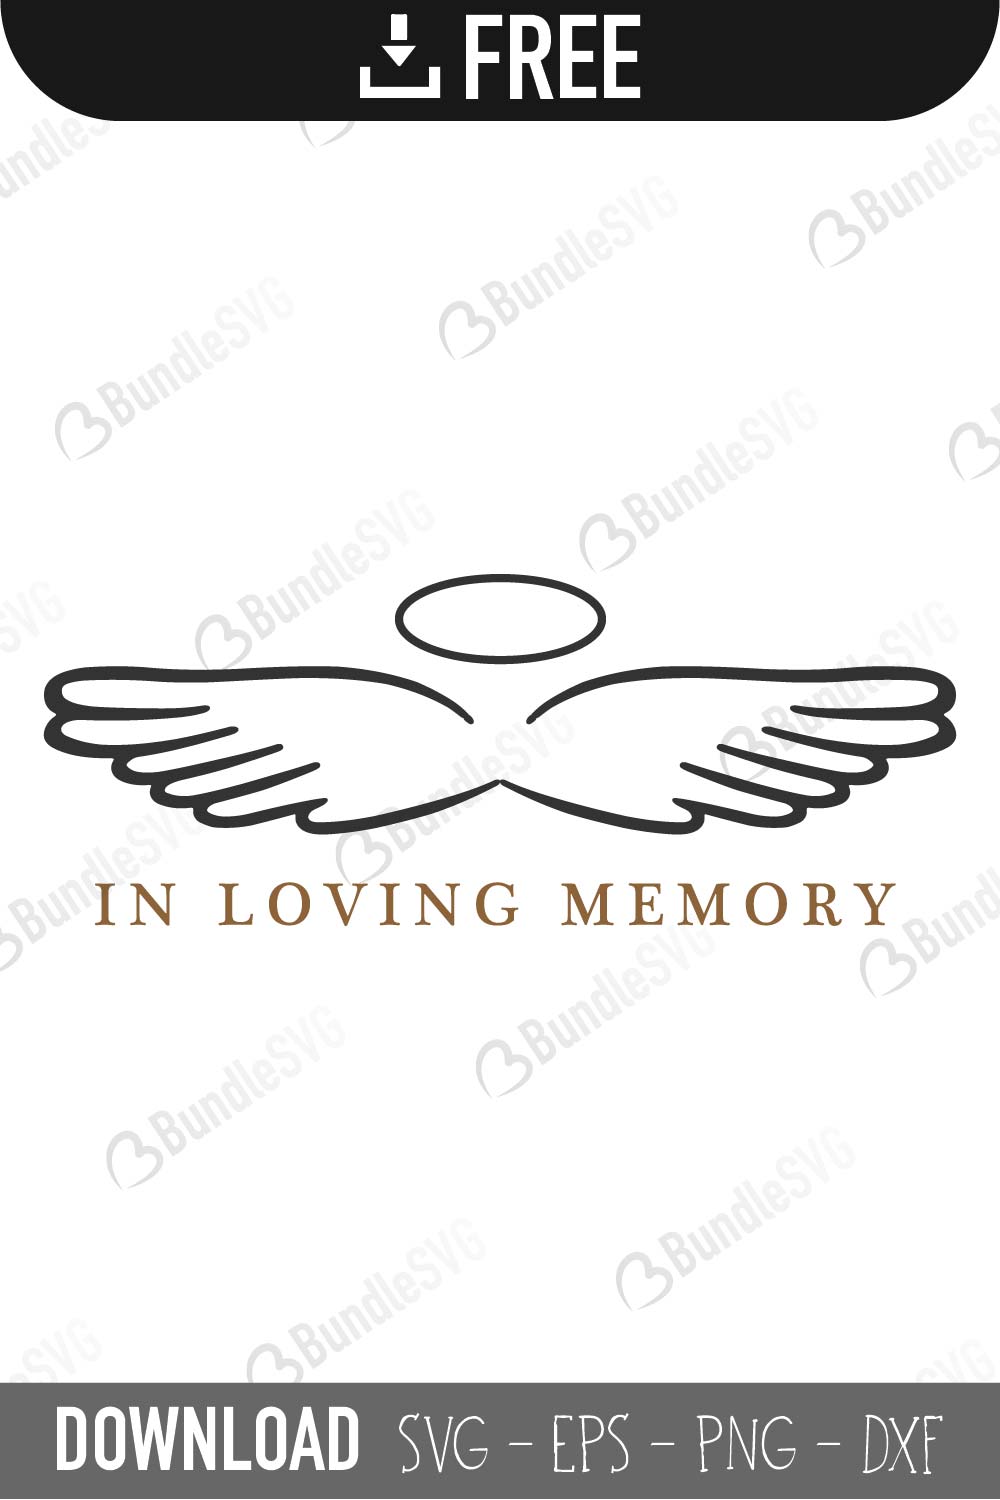 In Loving Memory SVG Cut Files Free Download | BundleSVG